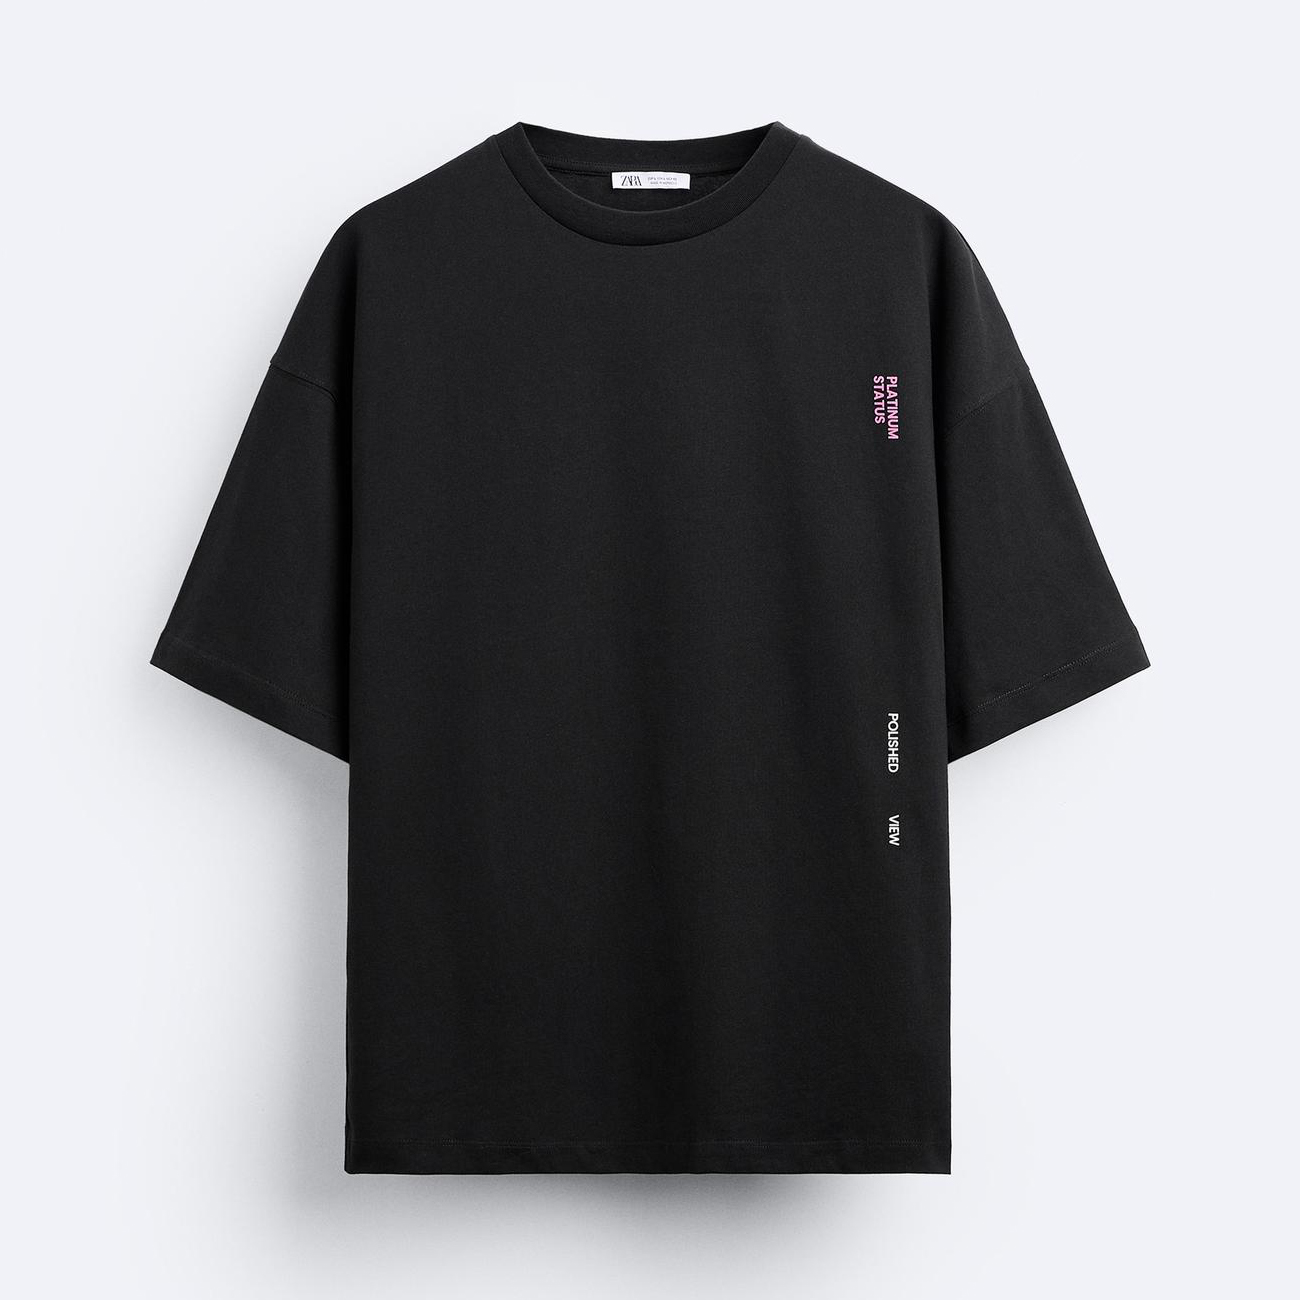 Футболка Zara Contrast Printed, черный футболка zara printed knit черный